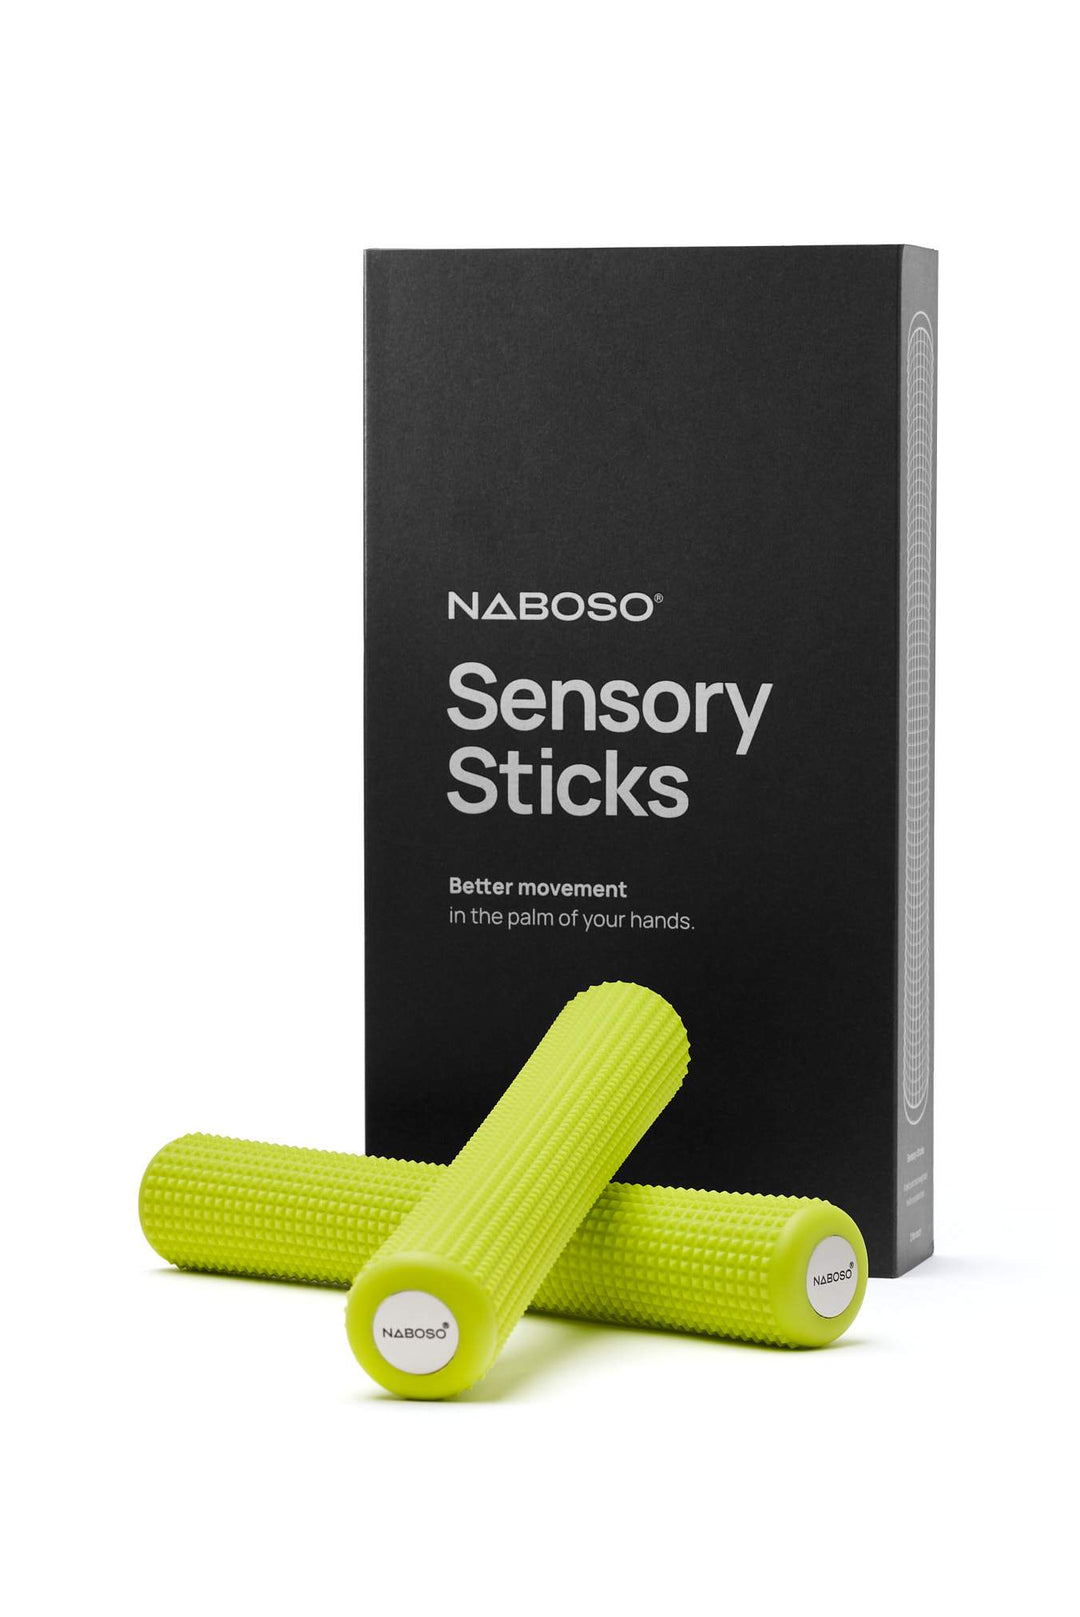 Sensory Stick packaging along with two Sensory Sticks